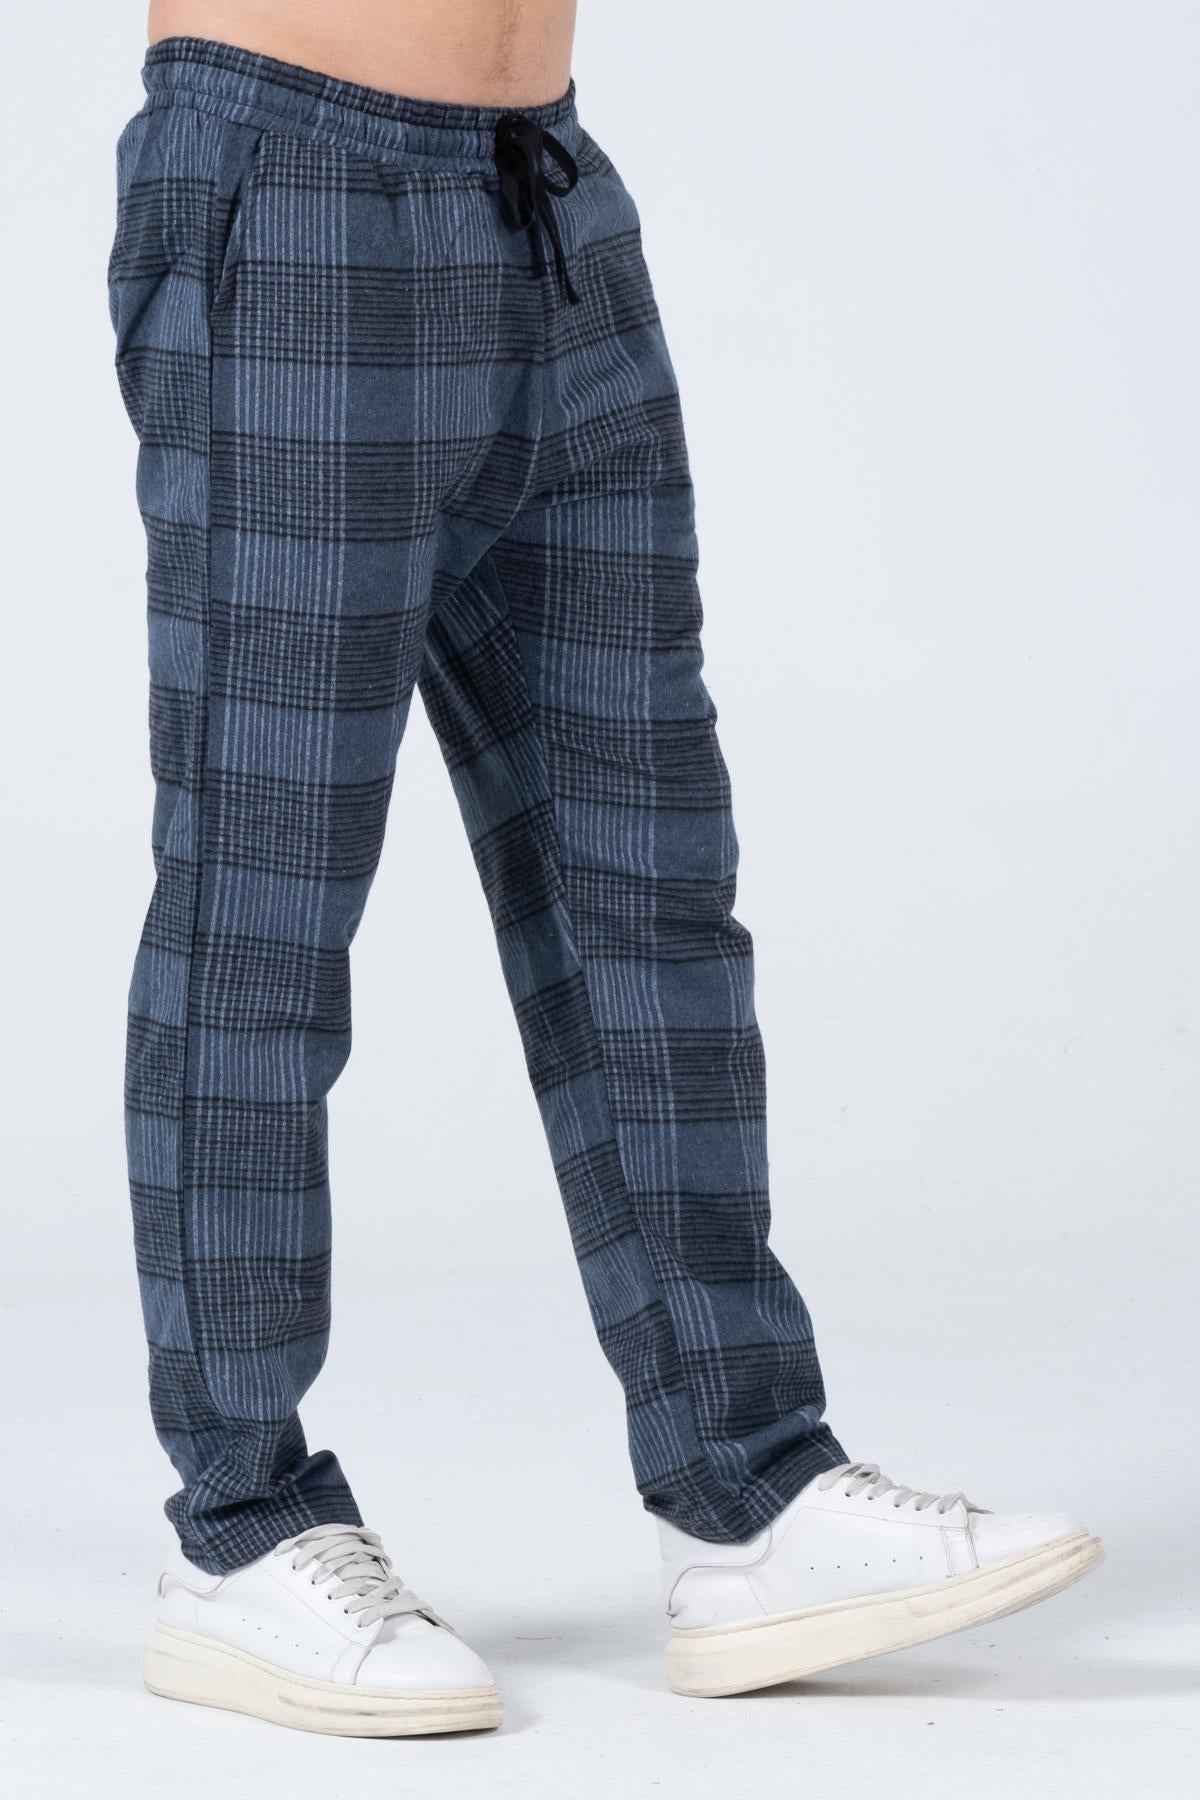 Men's plaid flannel sports pajamas six comfortable cutting